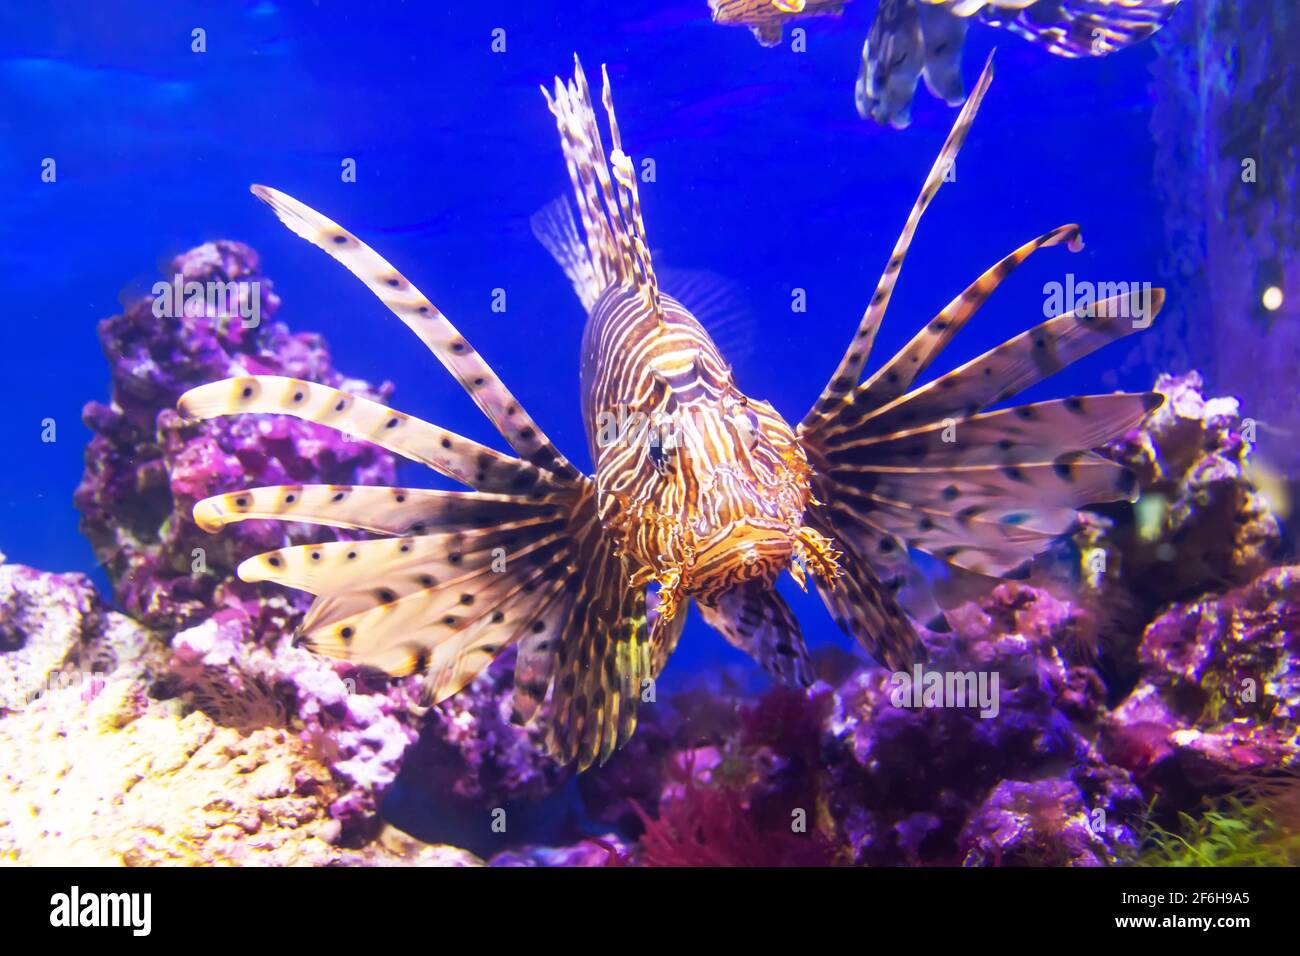 Dangerous Lionfish zebra fish in the Indian ocean water Stock Photo